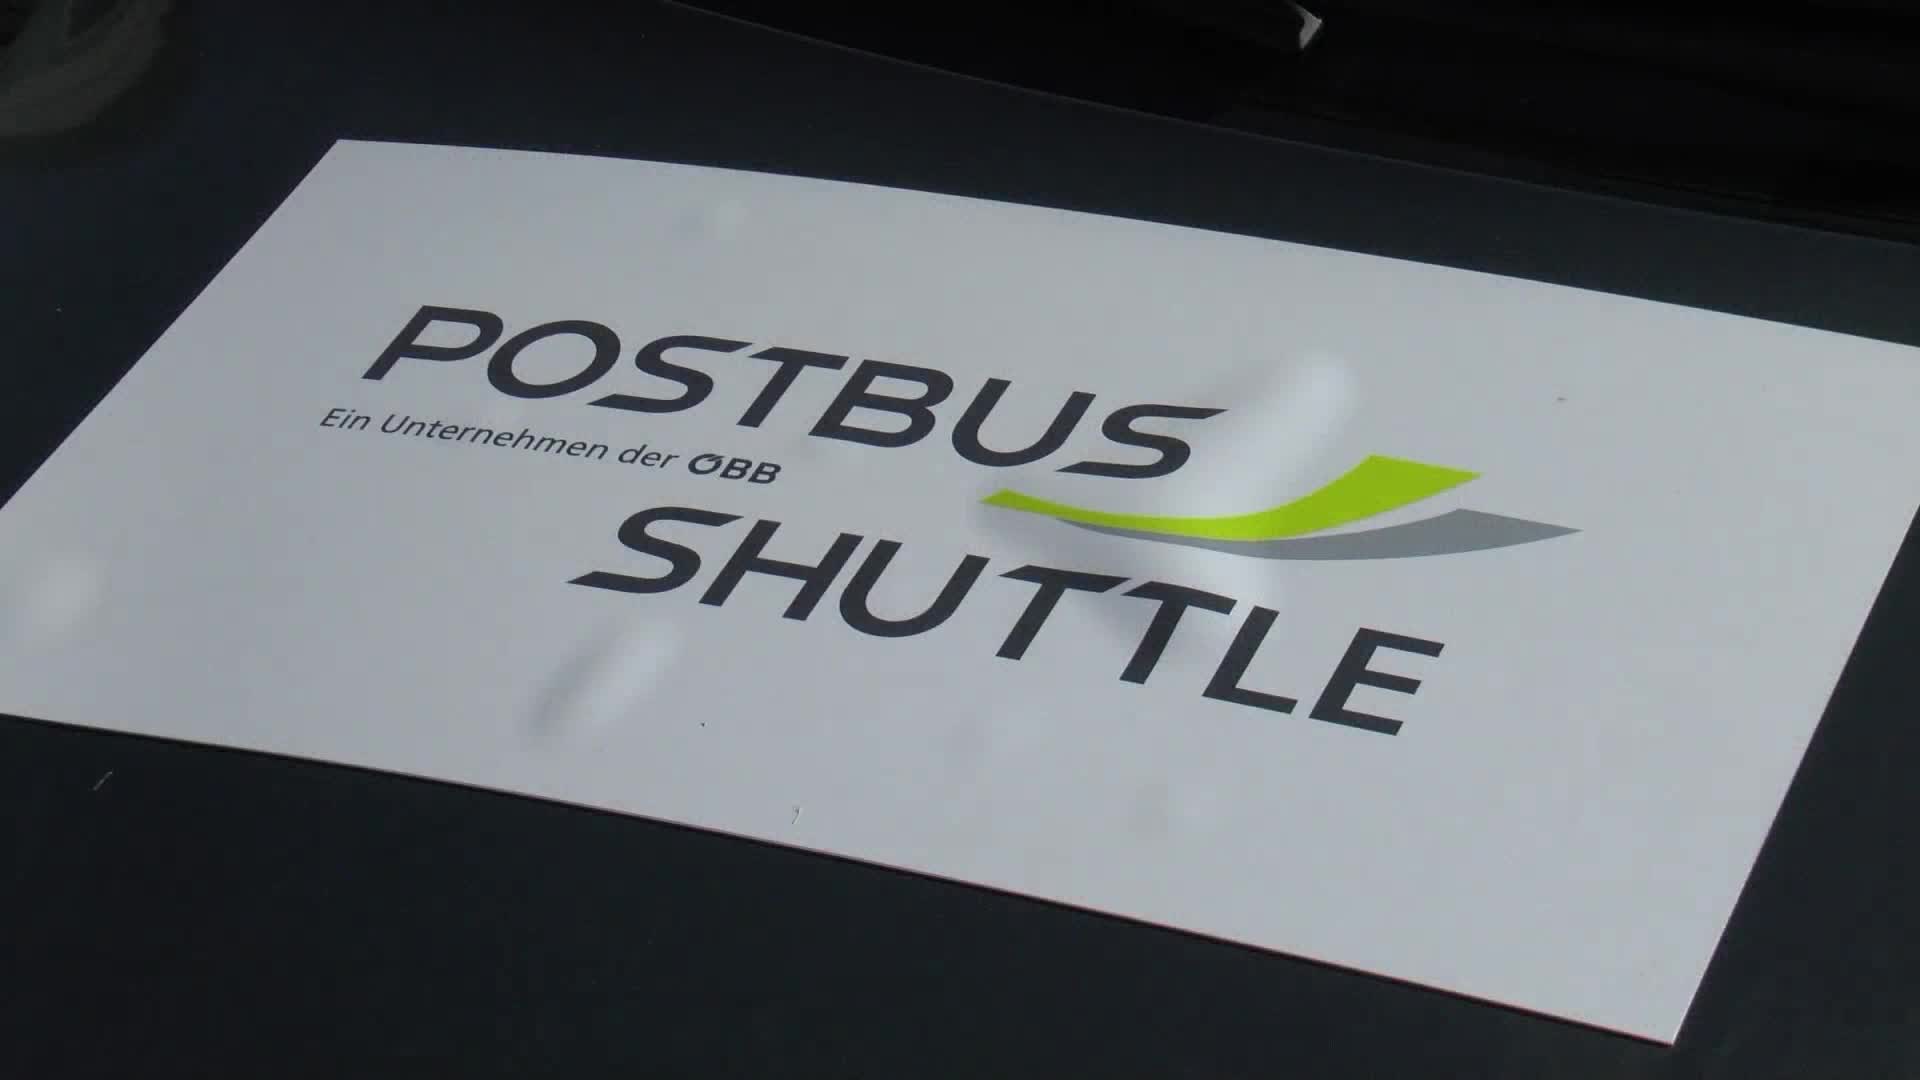 Postbusshuttle